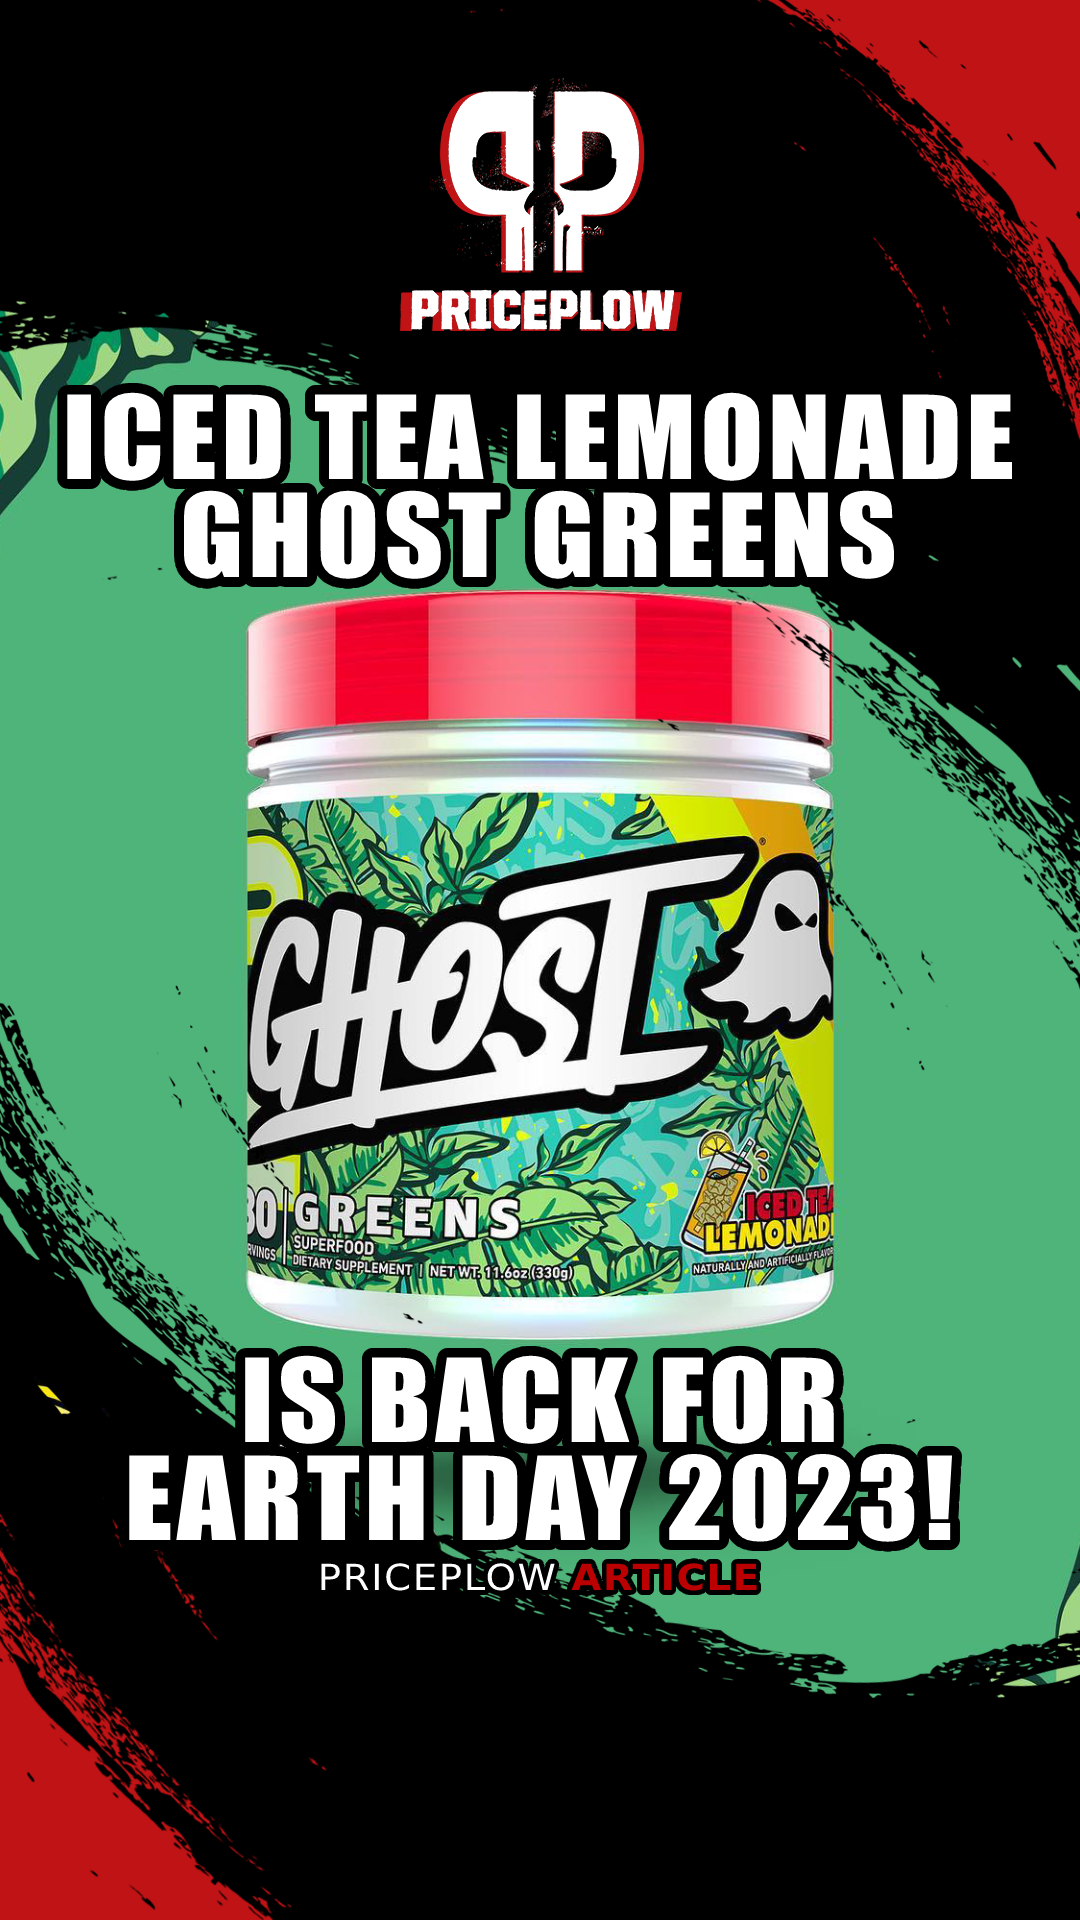 Ghost Greens Iced Tea Lemonade